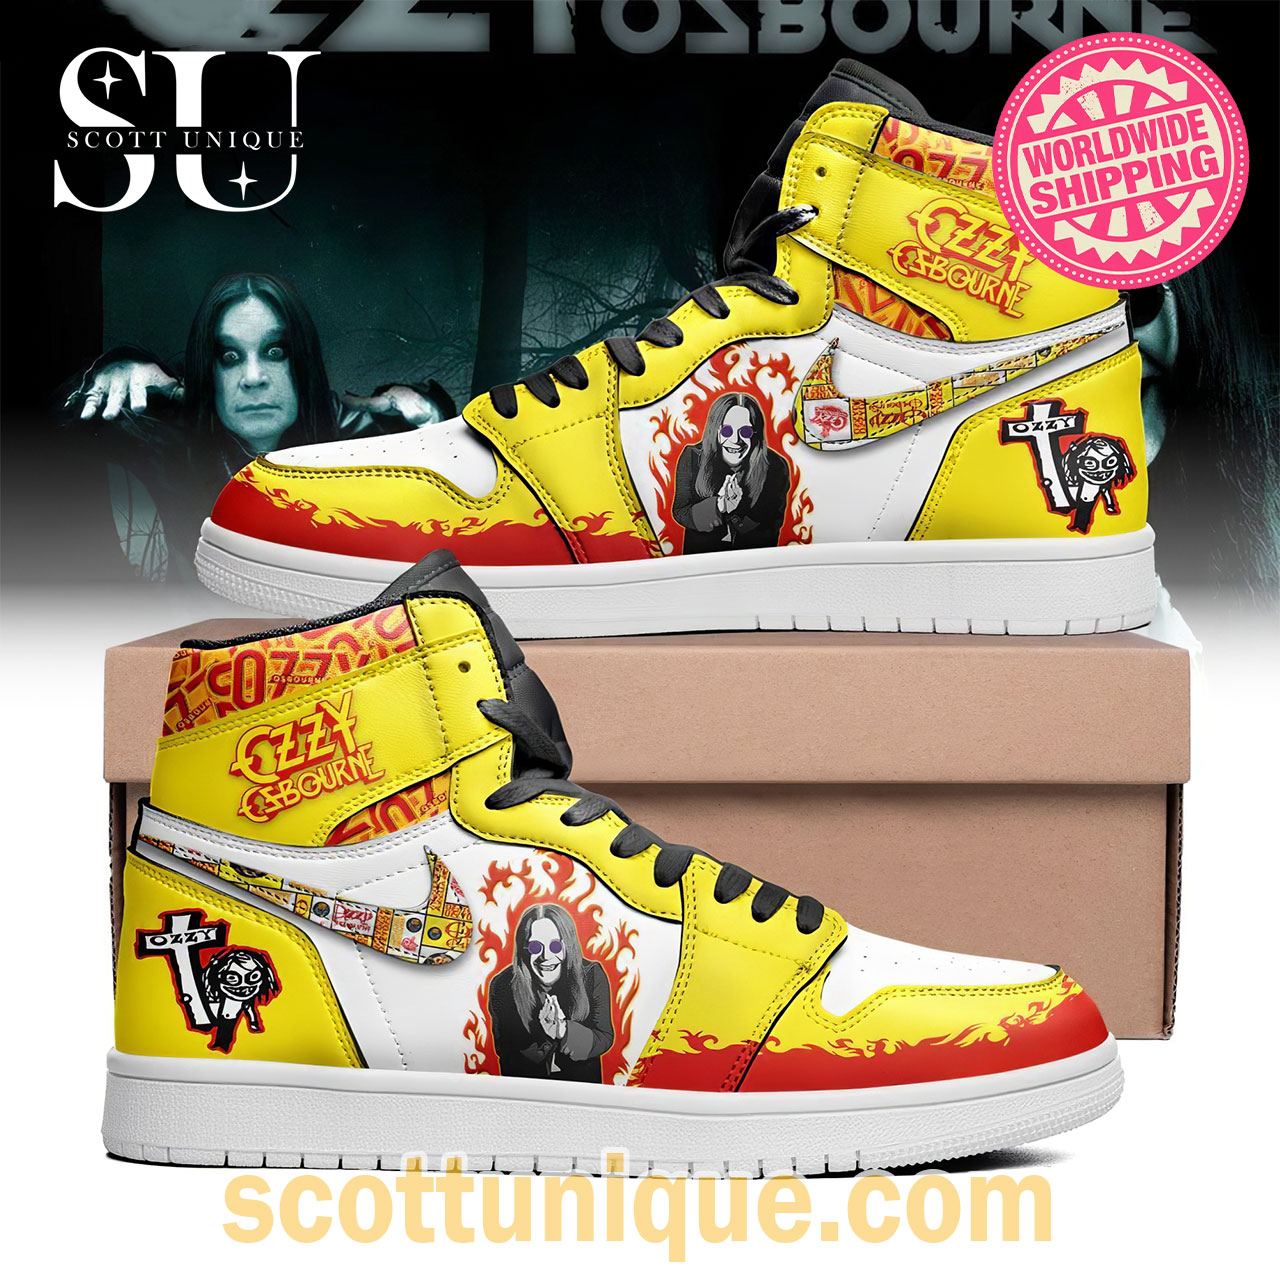 Ozzy Osbourne Yellow Fire Nike Air Jordan High Top Sneakers